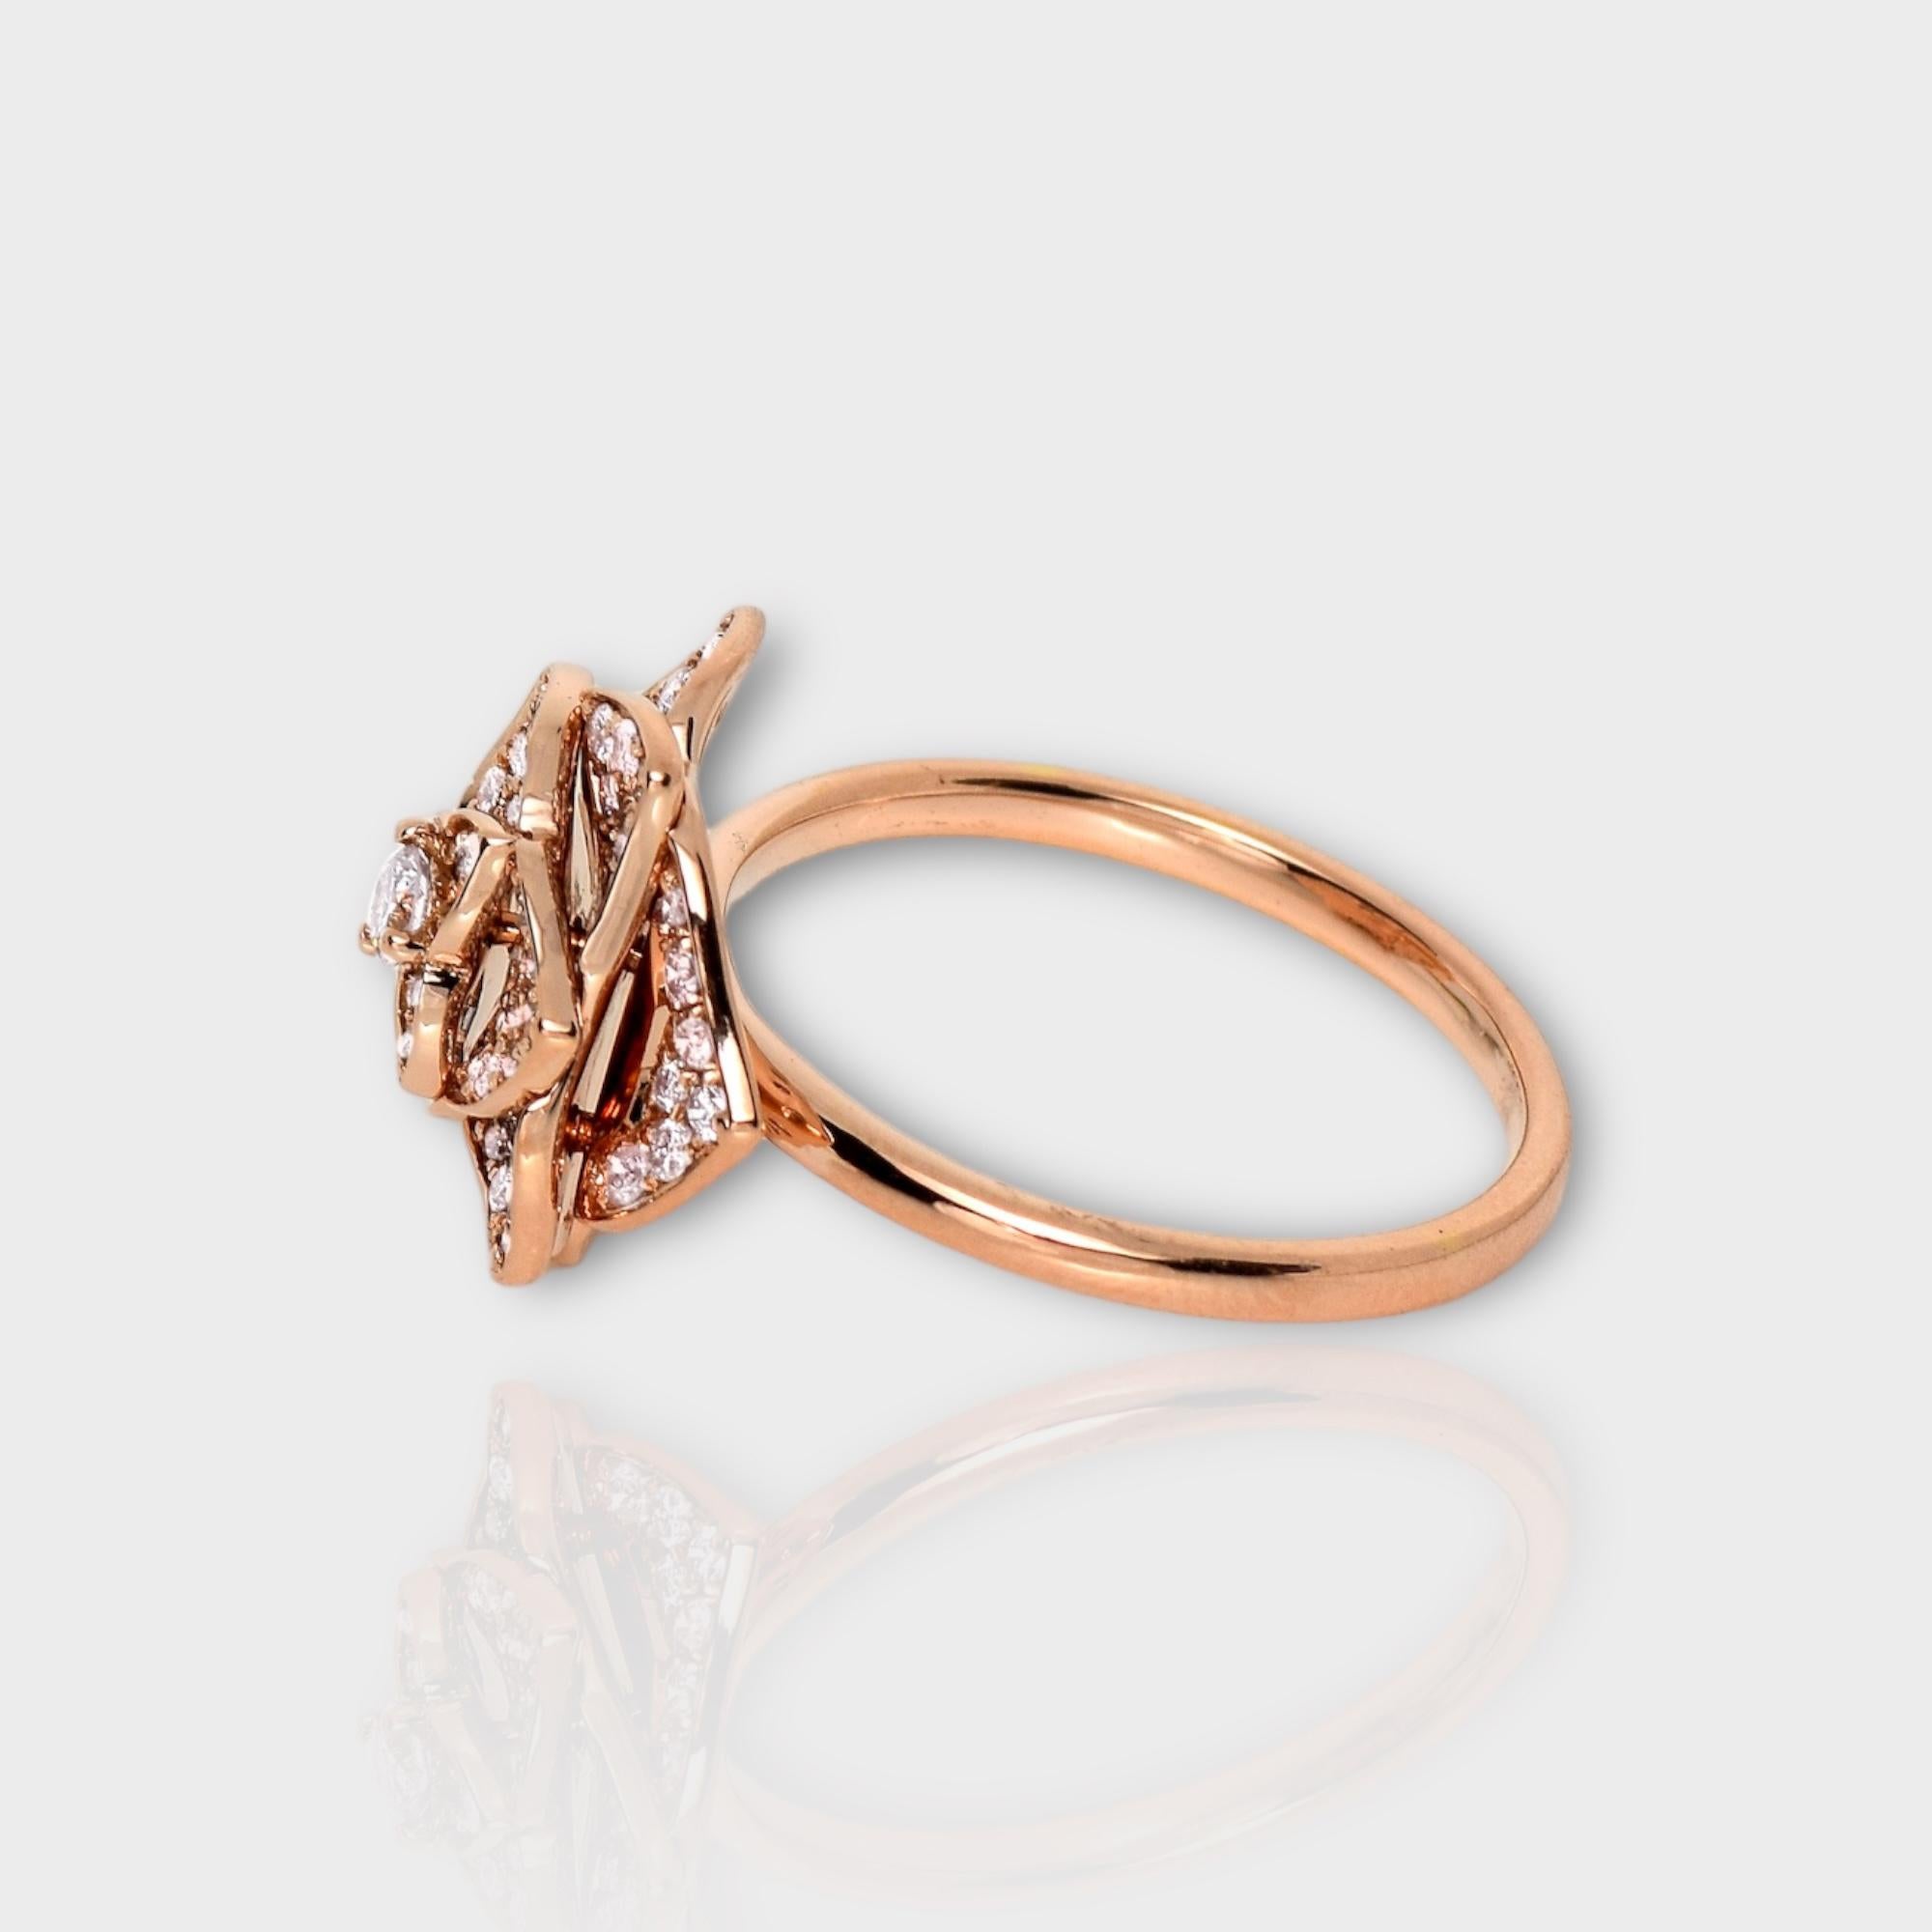 IGI 14K 0.60 ct Natural Pink Diamonds Rose Design Antique Art Deco Ring For Sale 1